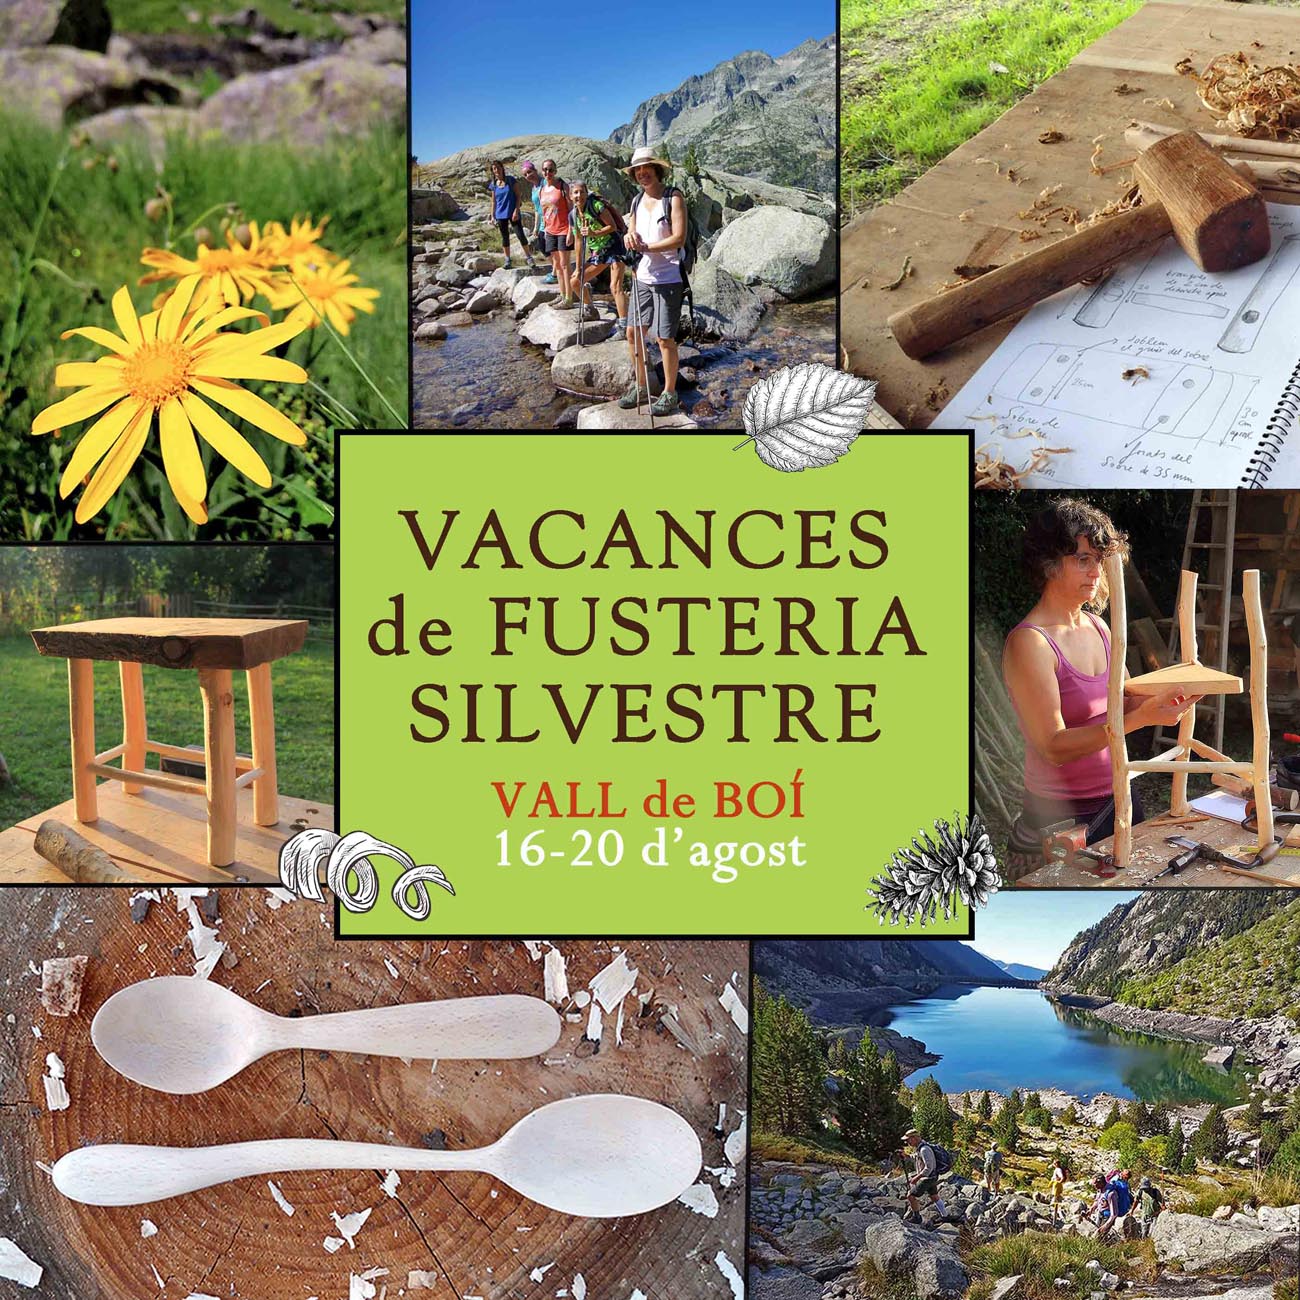 Vacances de fusteria silvestre Vall de Boí